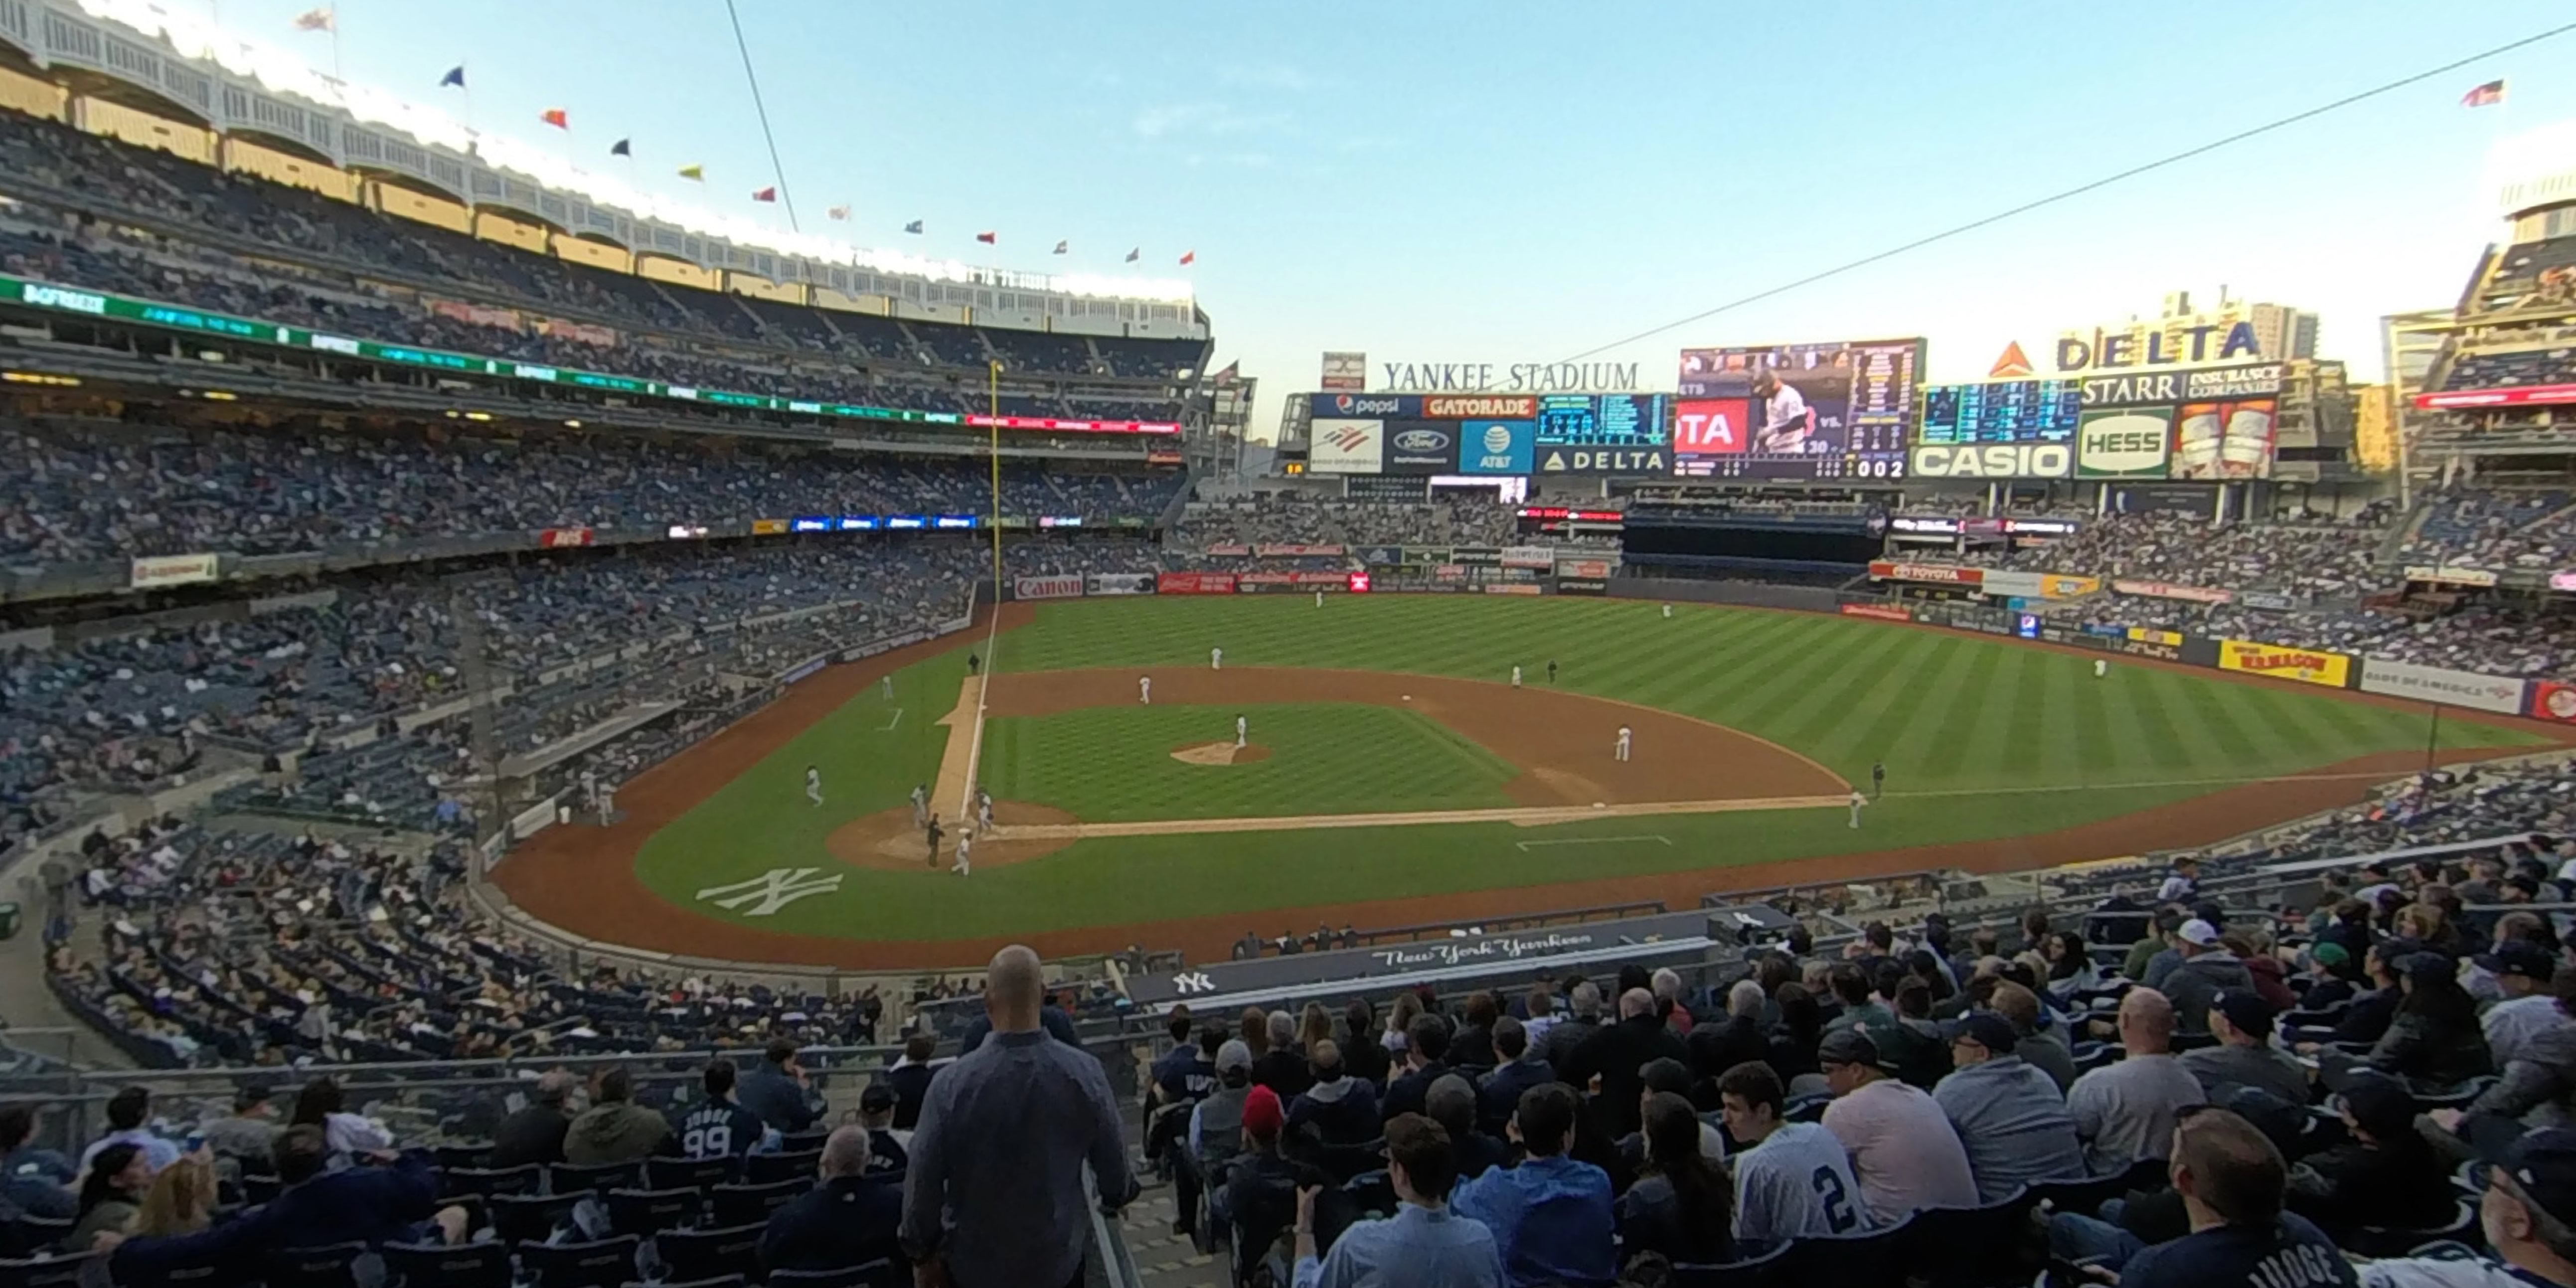 section 217 panoramic seat view  for baseball - yankee stadium